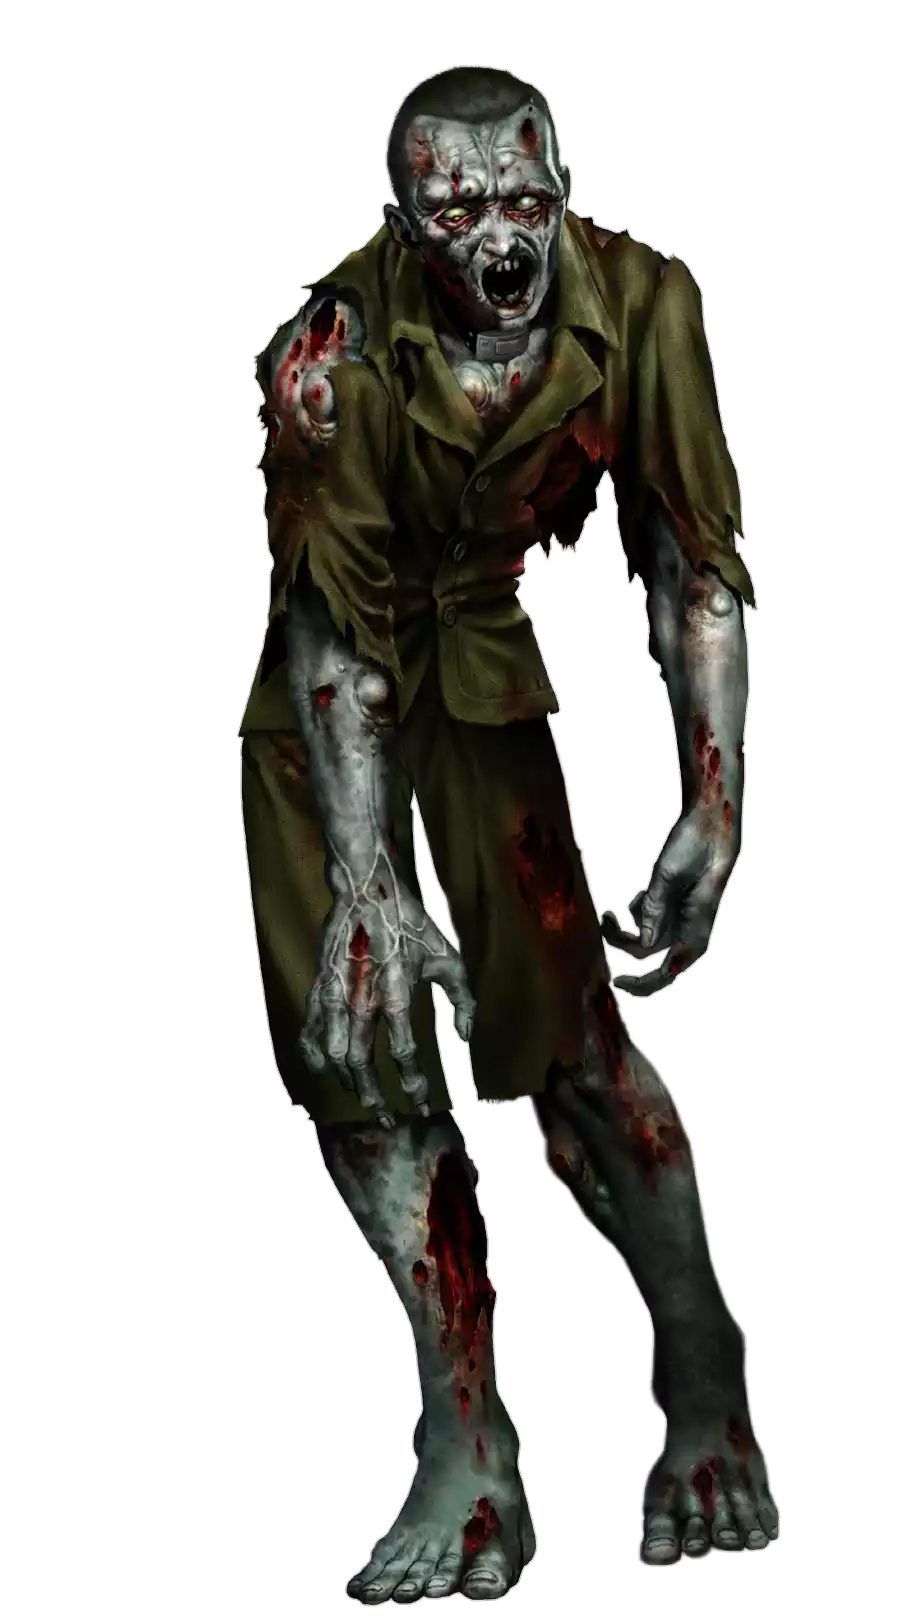 Image - Zombie Render By Skodwarde.png | VS Battles Wiki ...